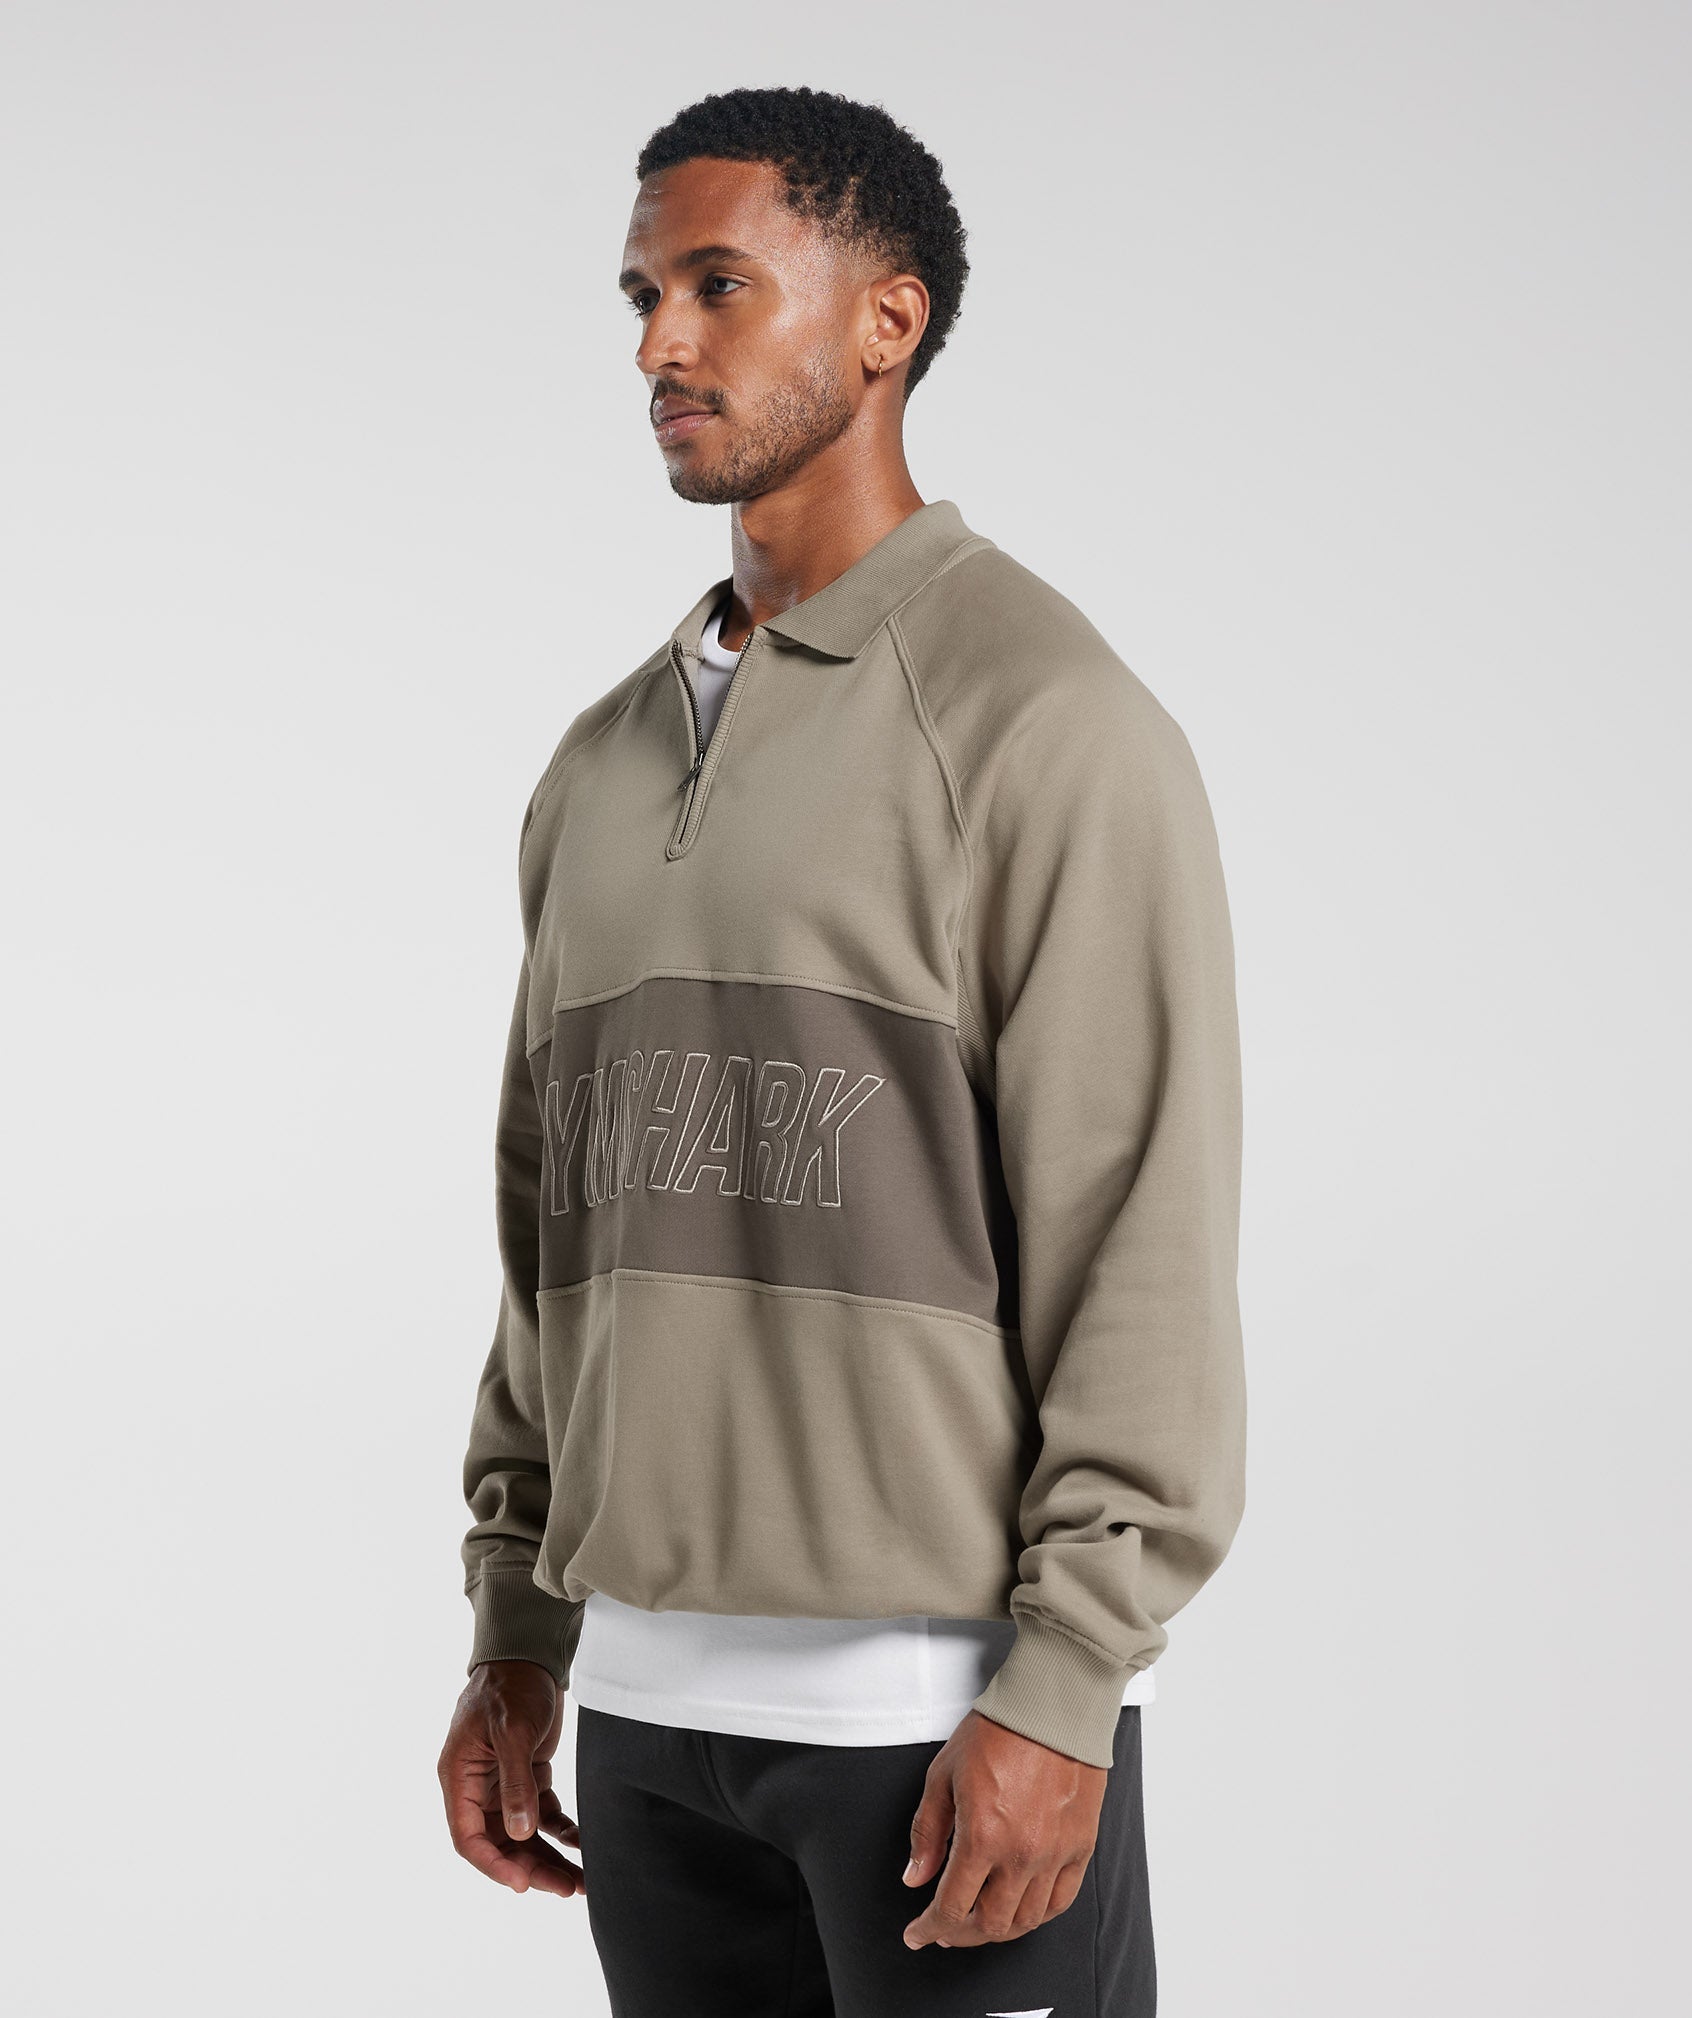 Rest Day Essentials Sweatshirt Polo in Linen Brown/Camo Brown - view 3